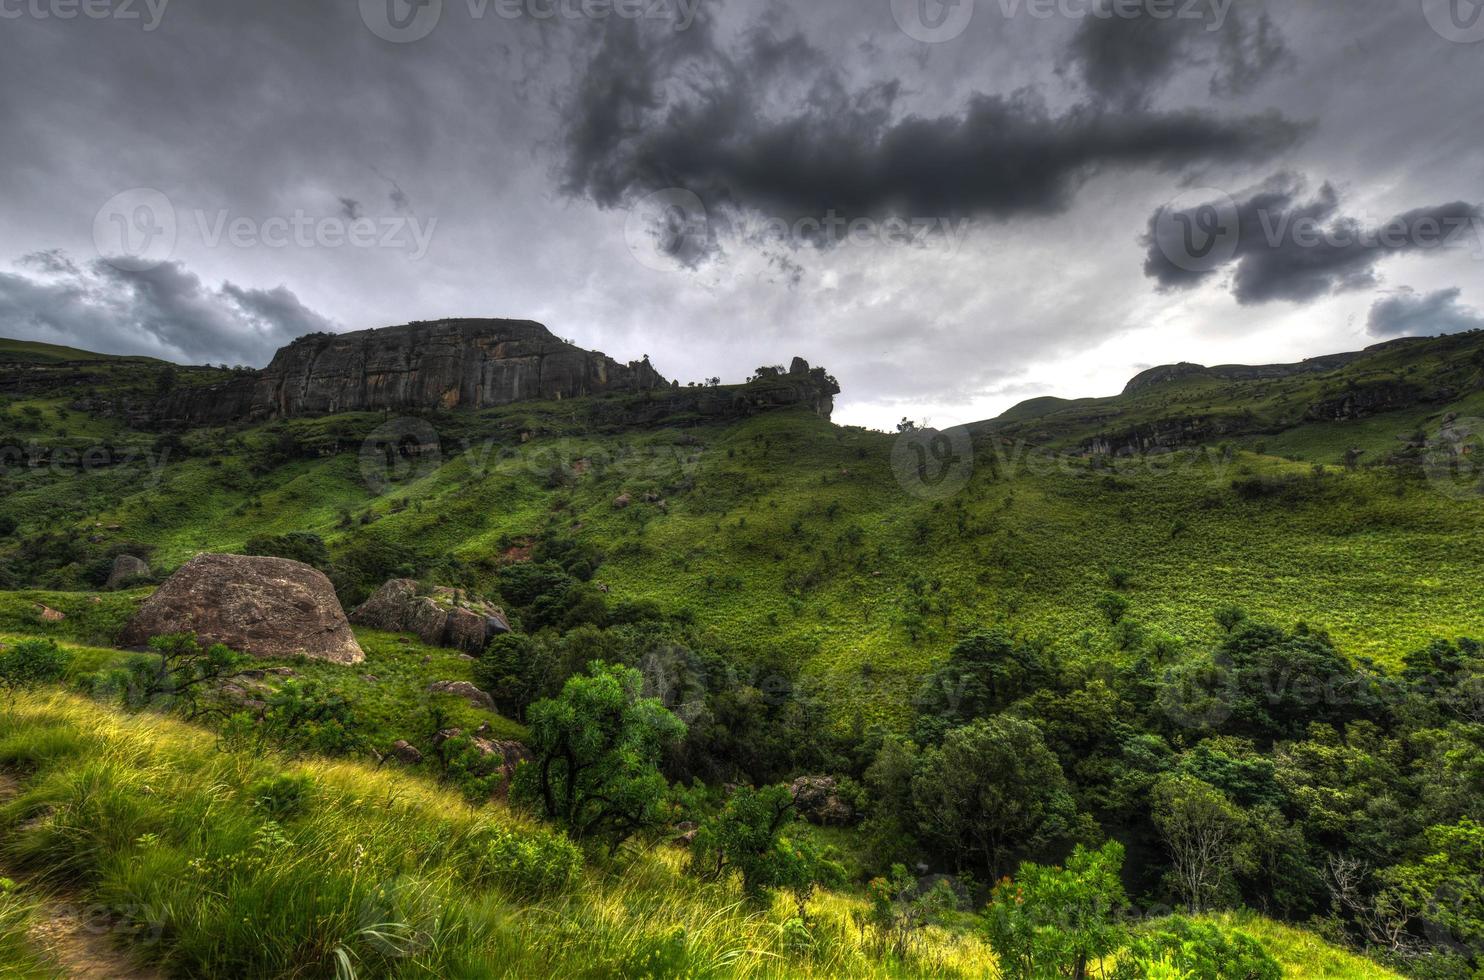 Landscape of Giants Castle Game Reserve photo